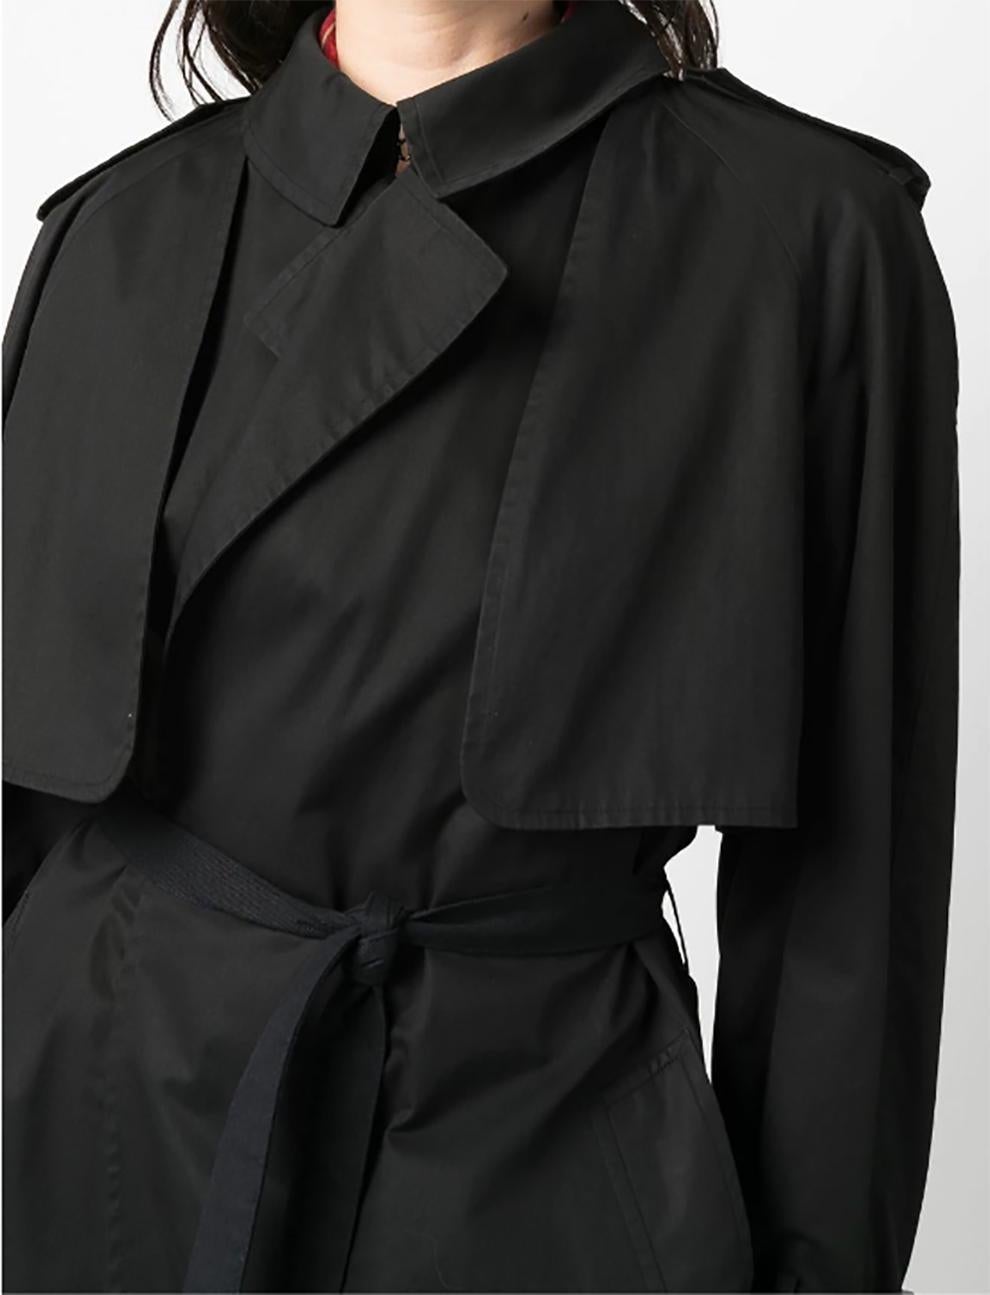 2003, Hermes by Margiela Black Trench Coat For Sale 5